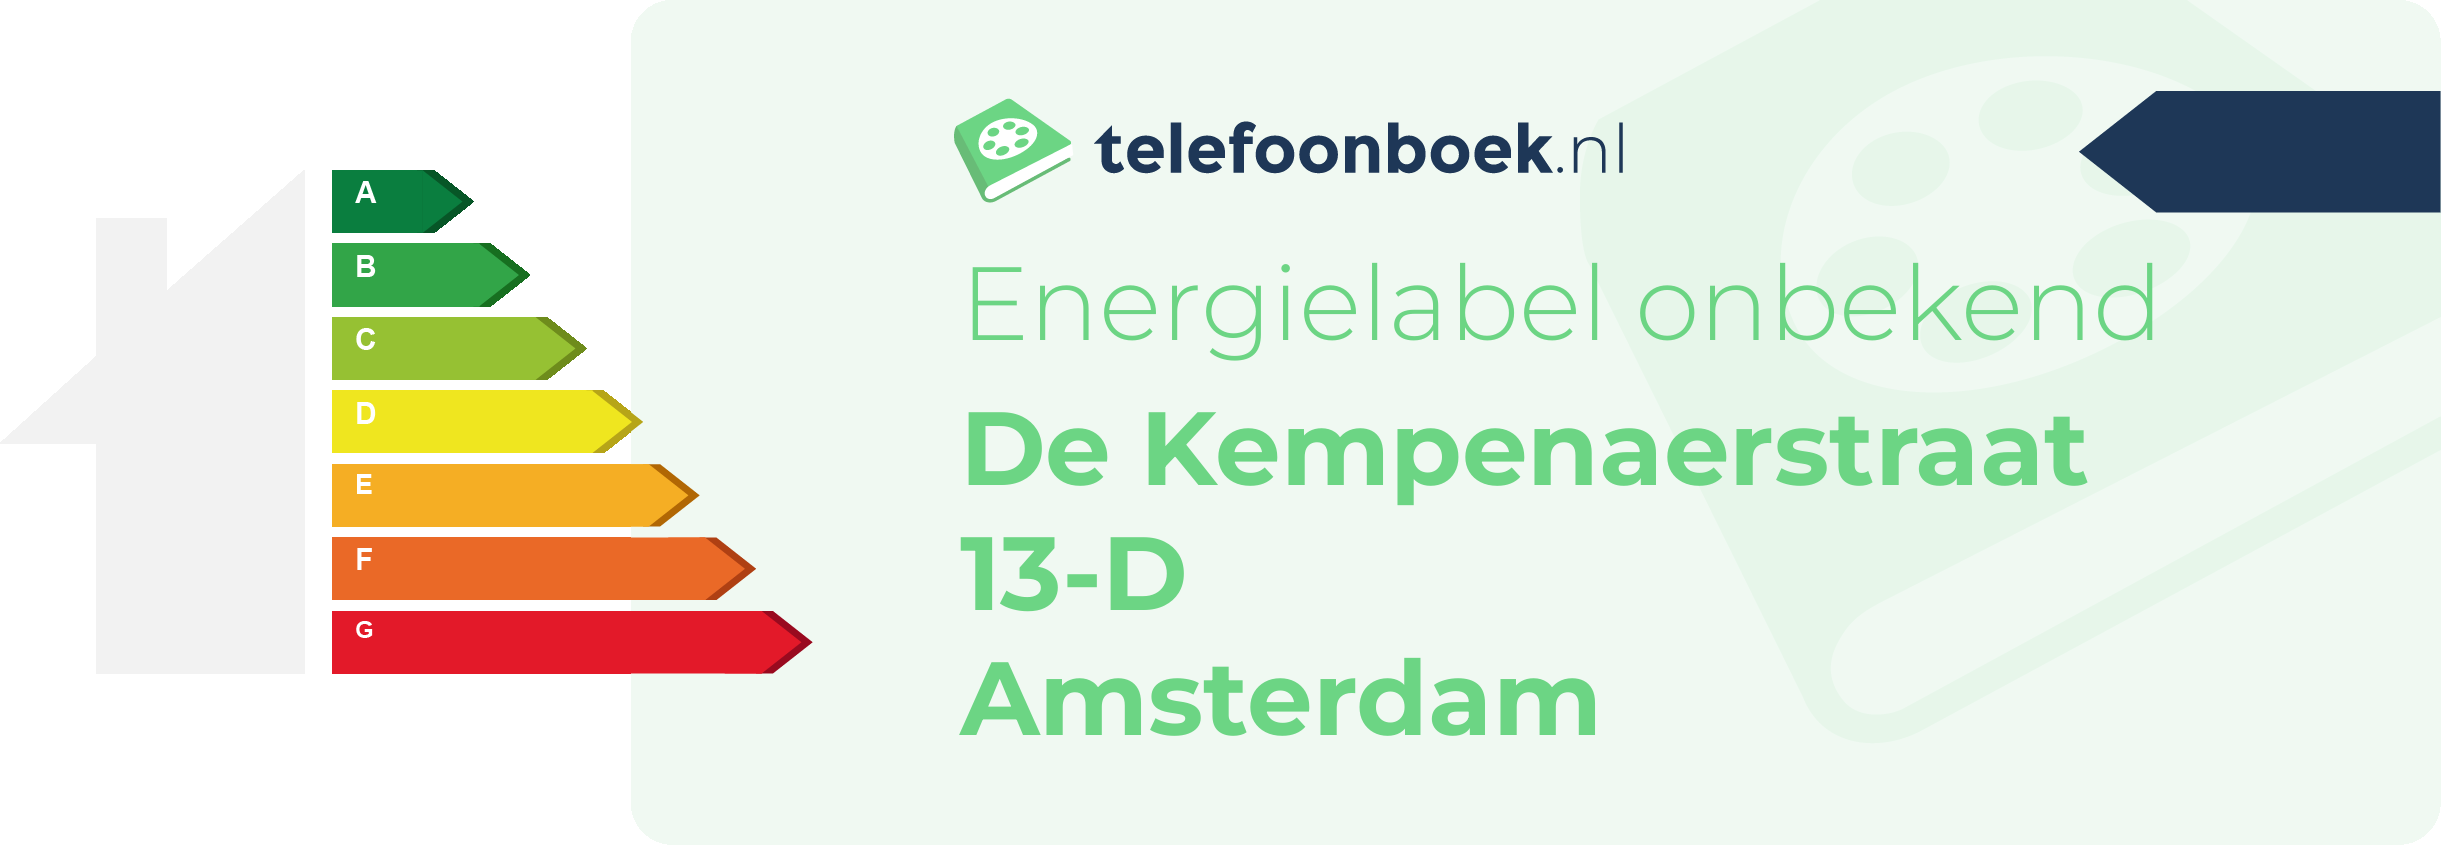 Energielabel De Kempenaerstraat 13-D Amsterdam